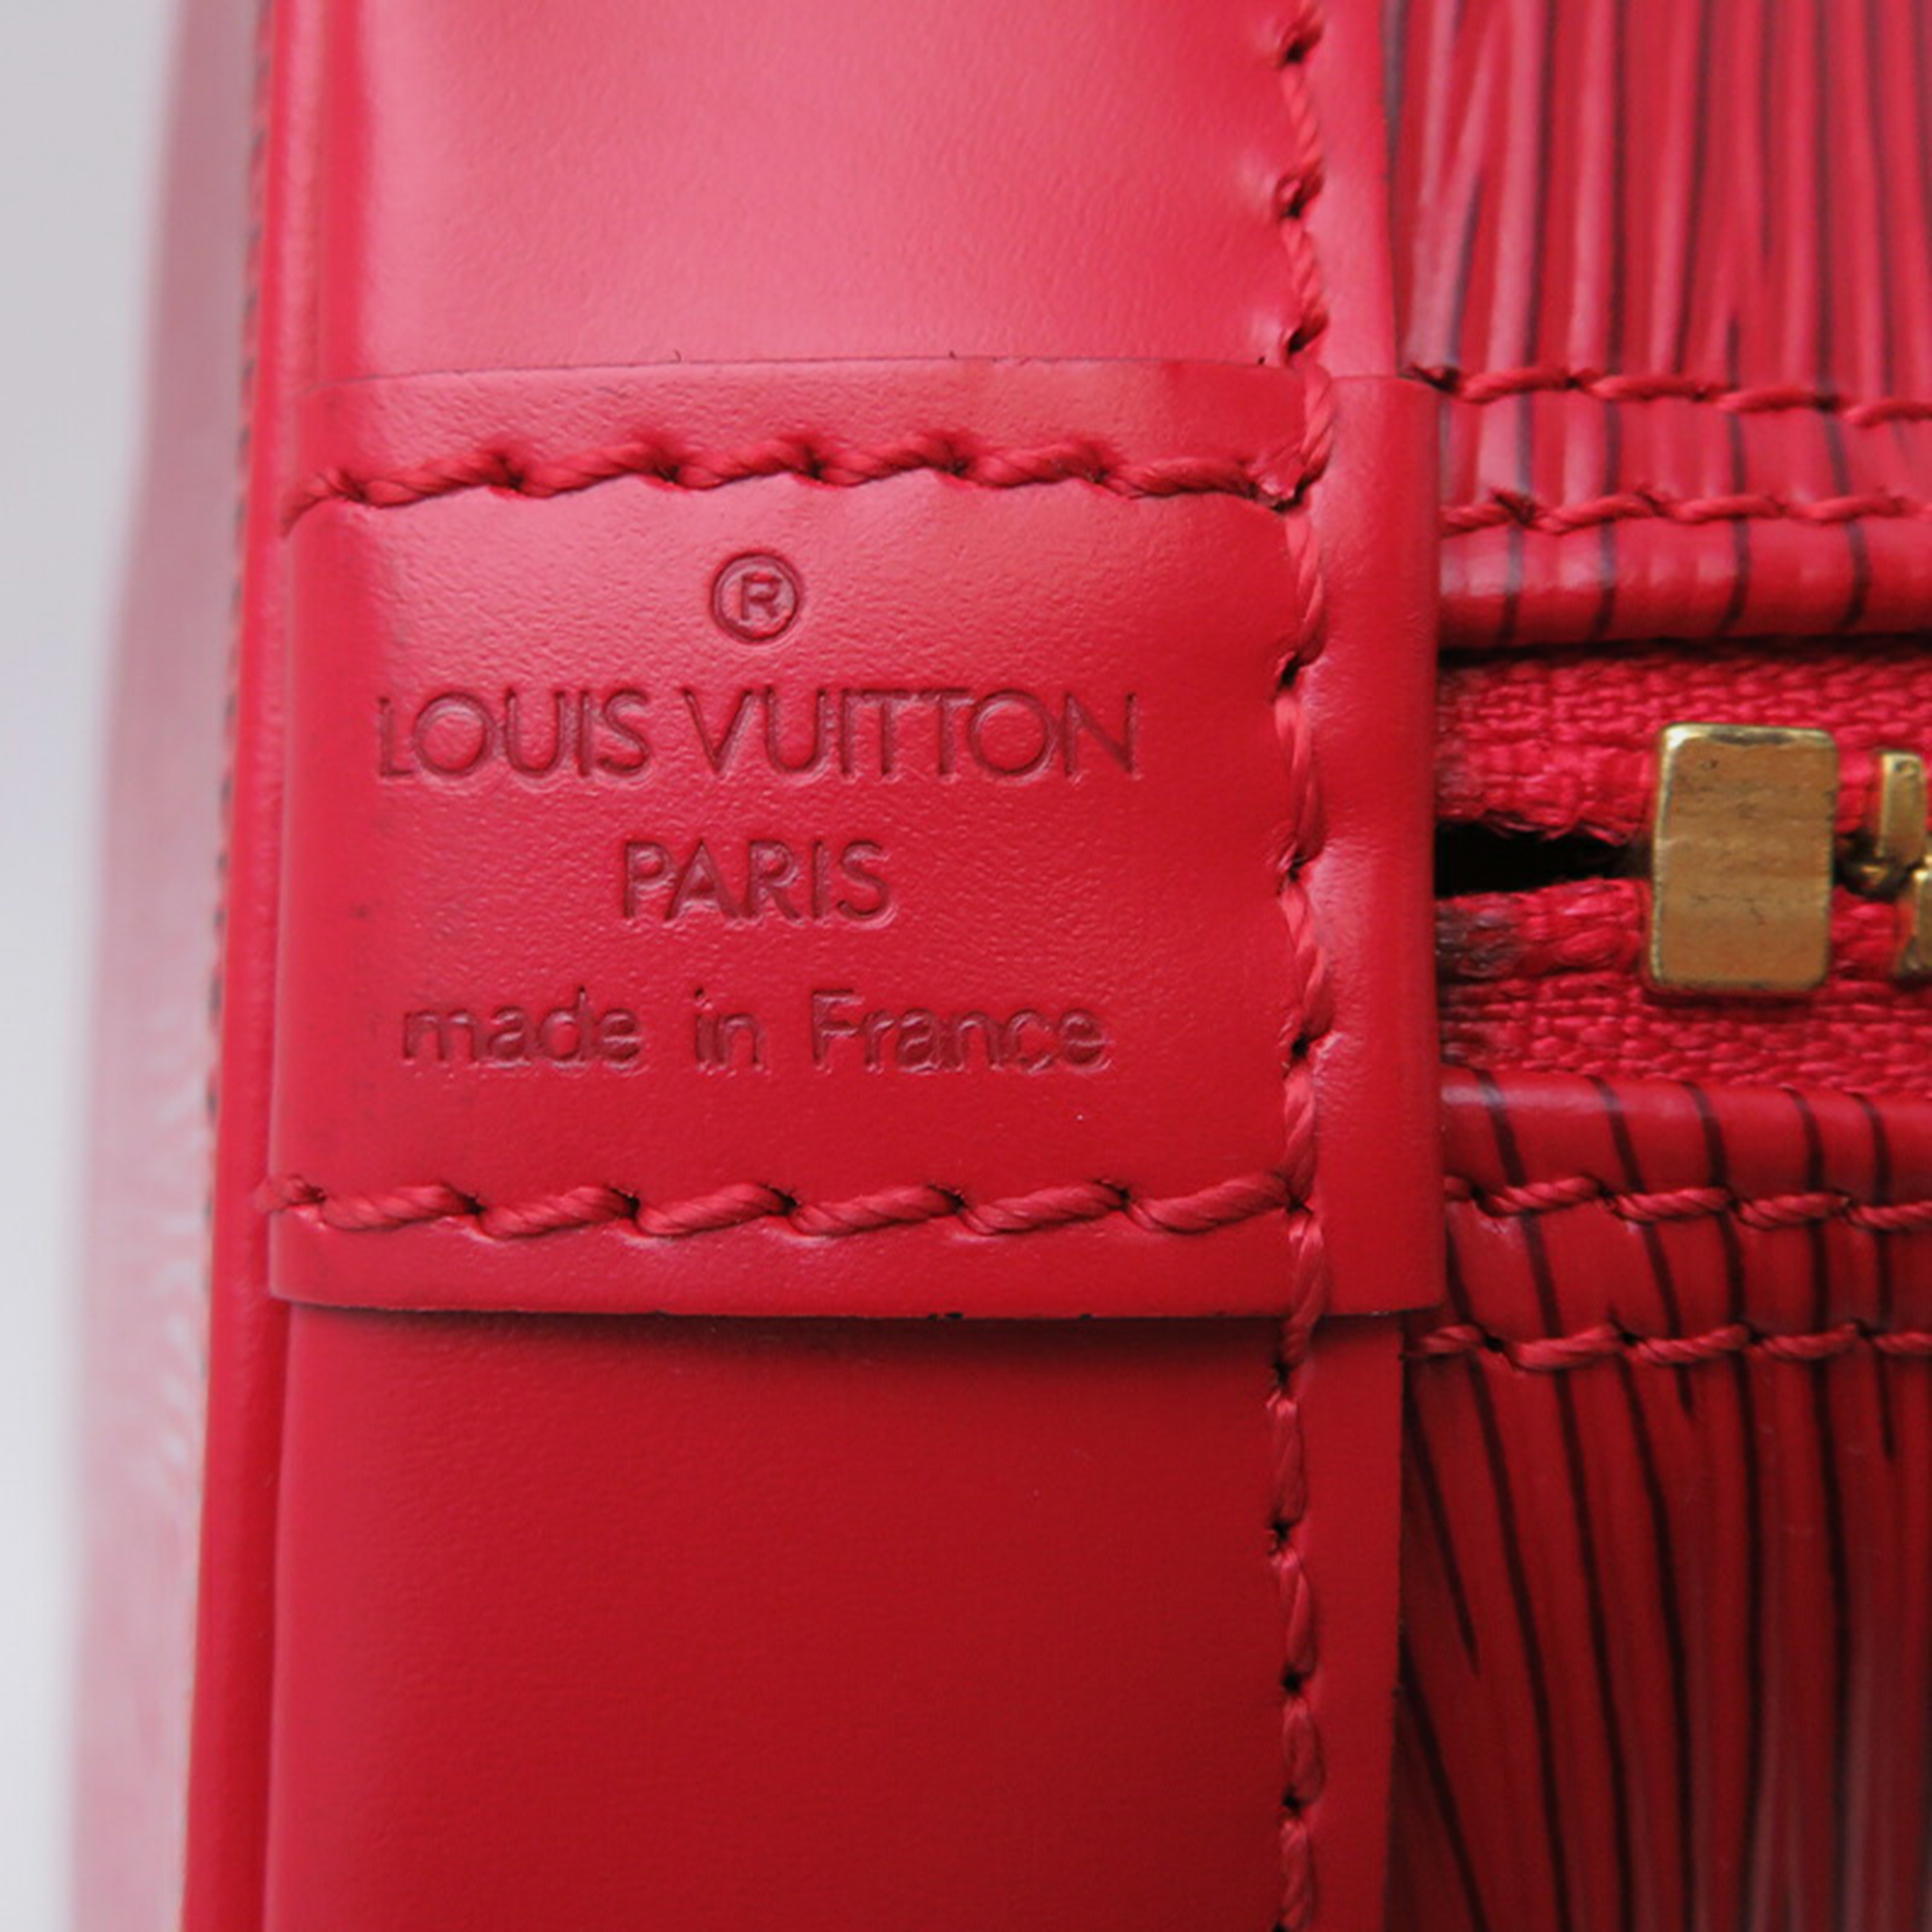 Louis Vuitton Red Epi Leather Alma PM Satchel